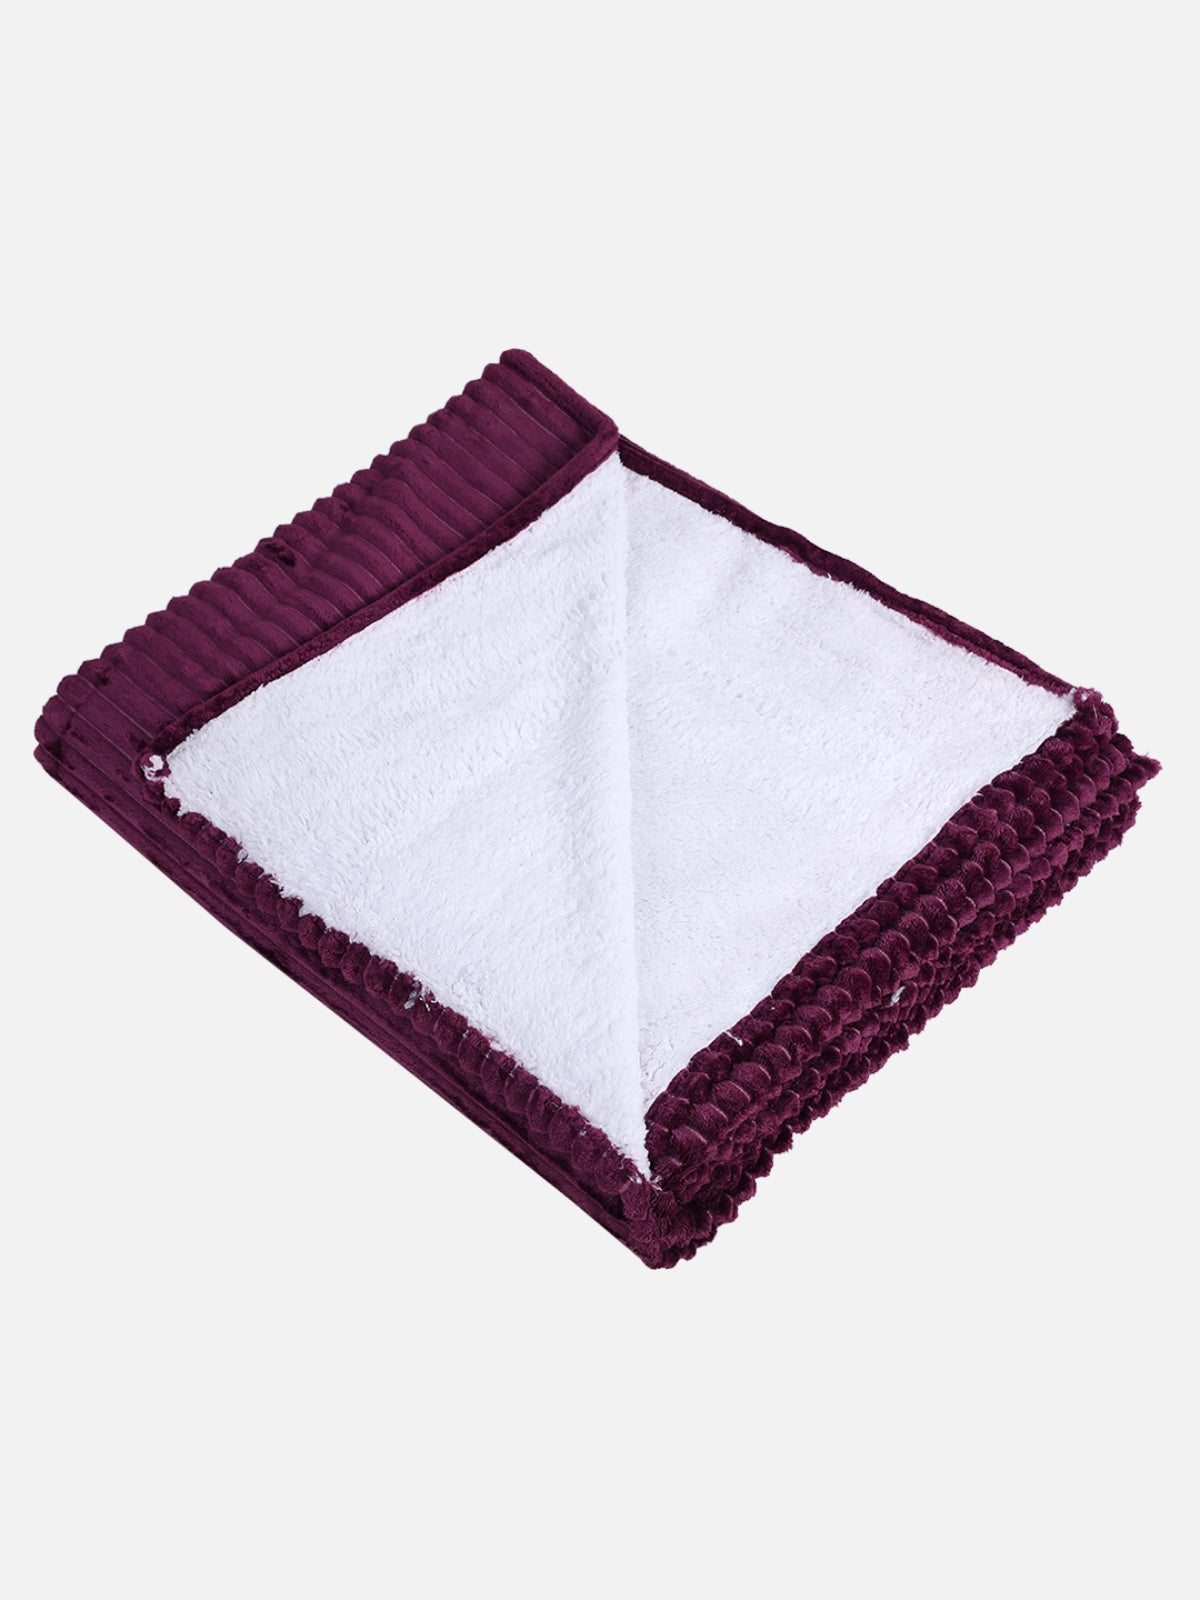 Purple 500 GSM Double Bed Stripes Patterned Sherpa Wool Blanket